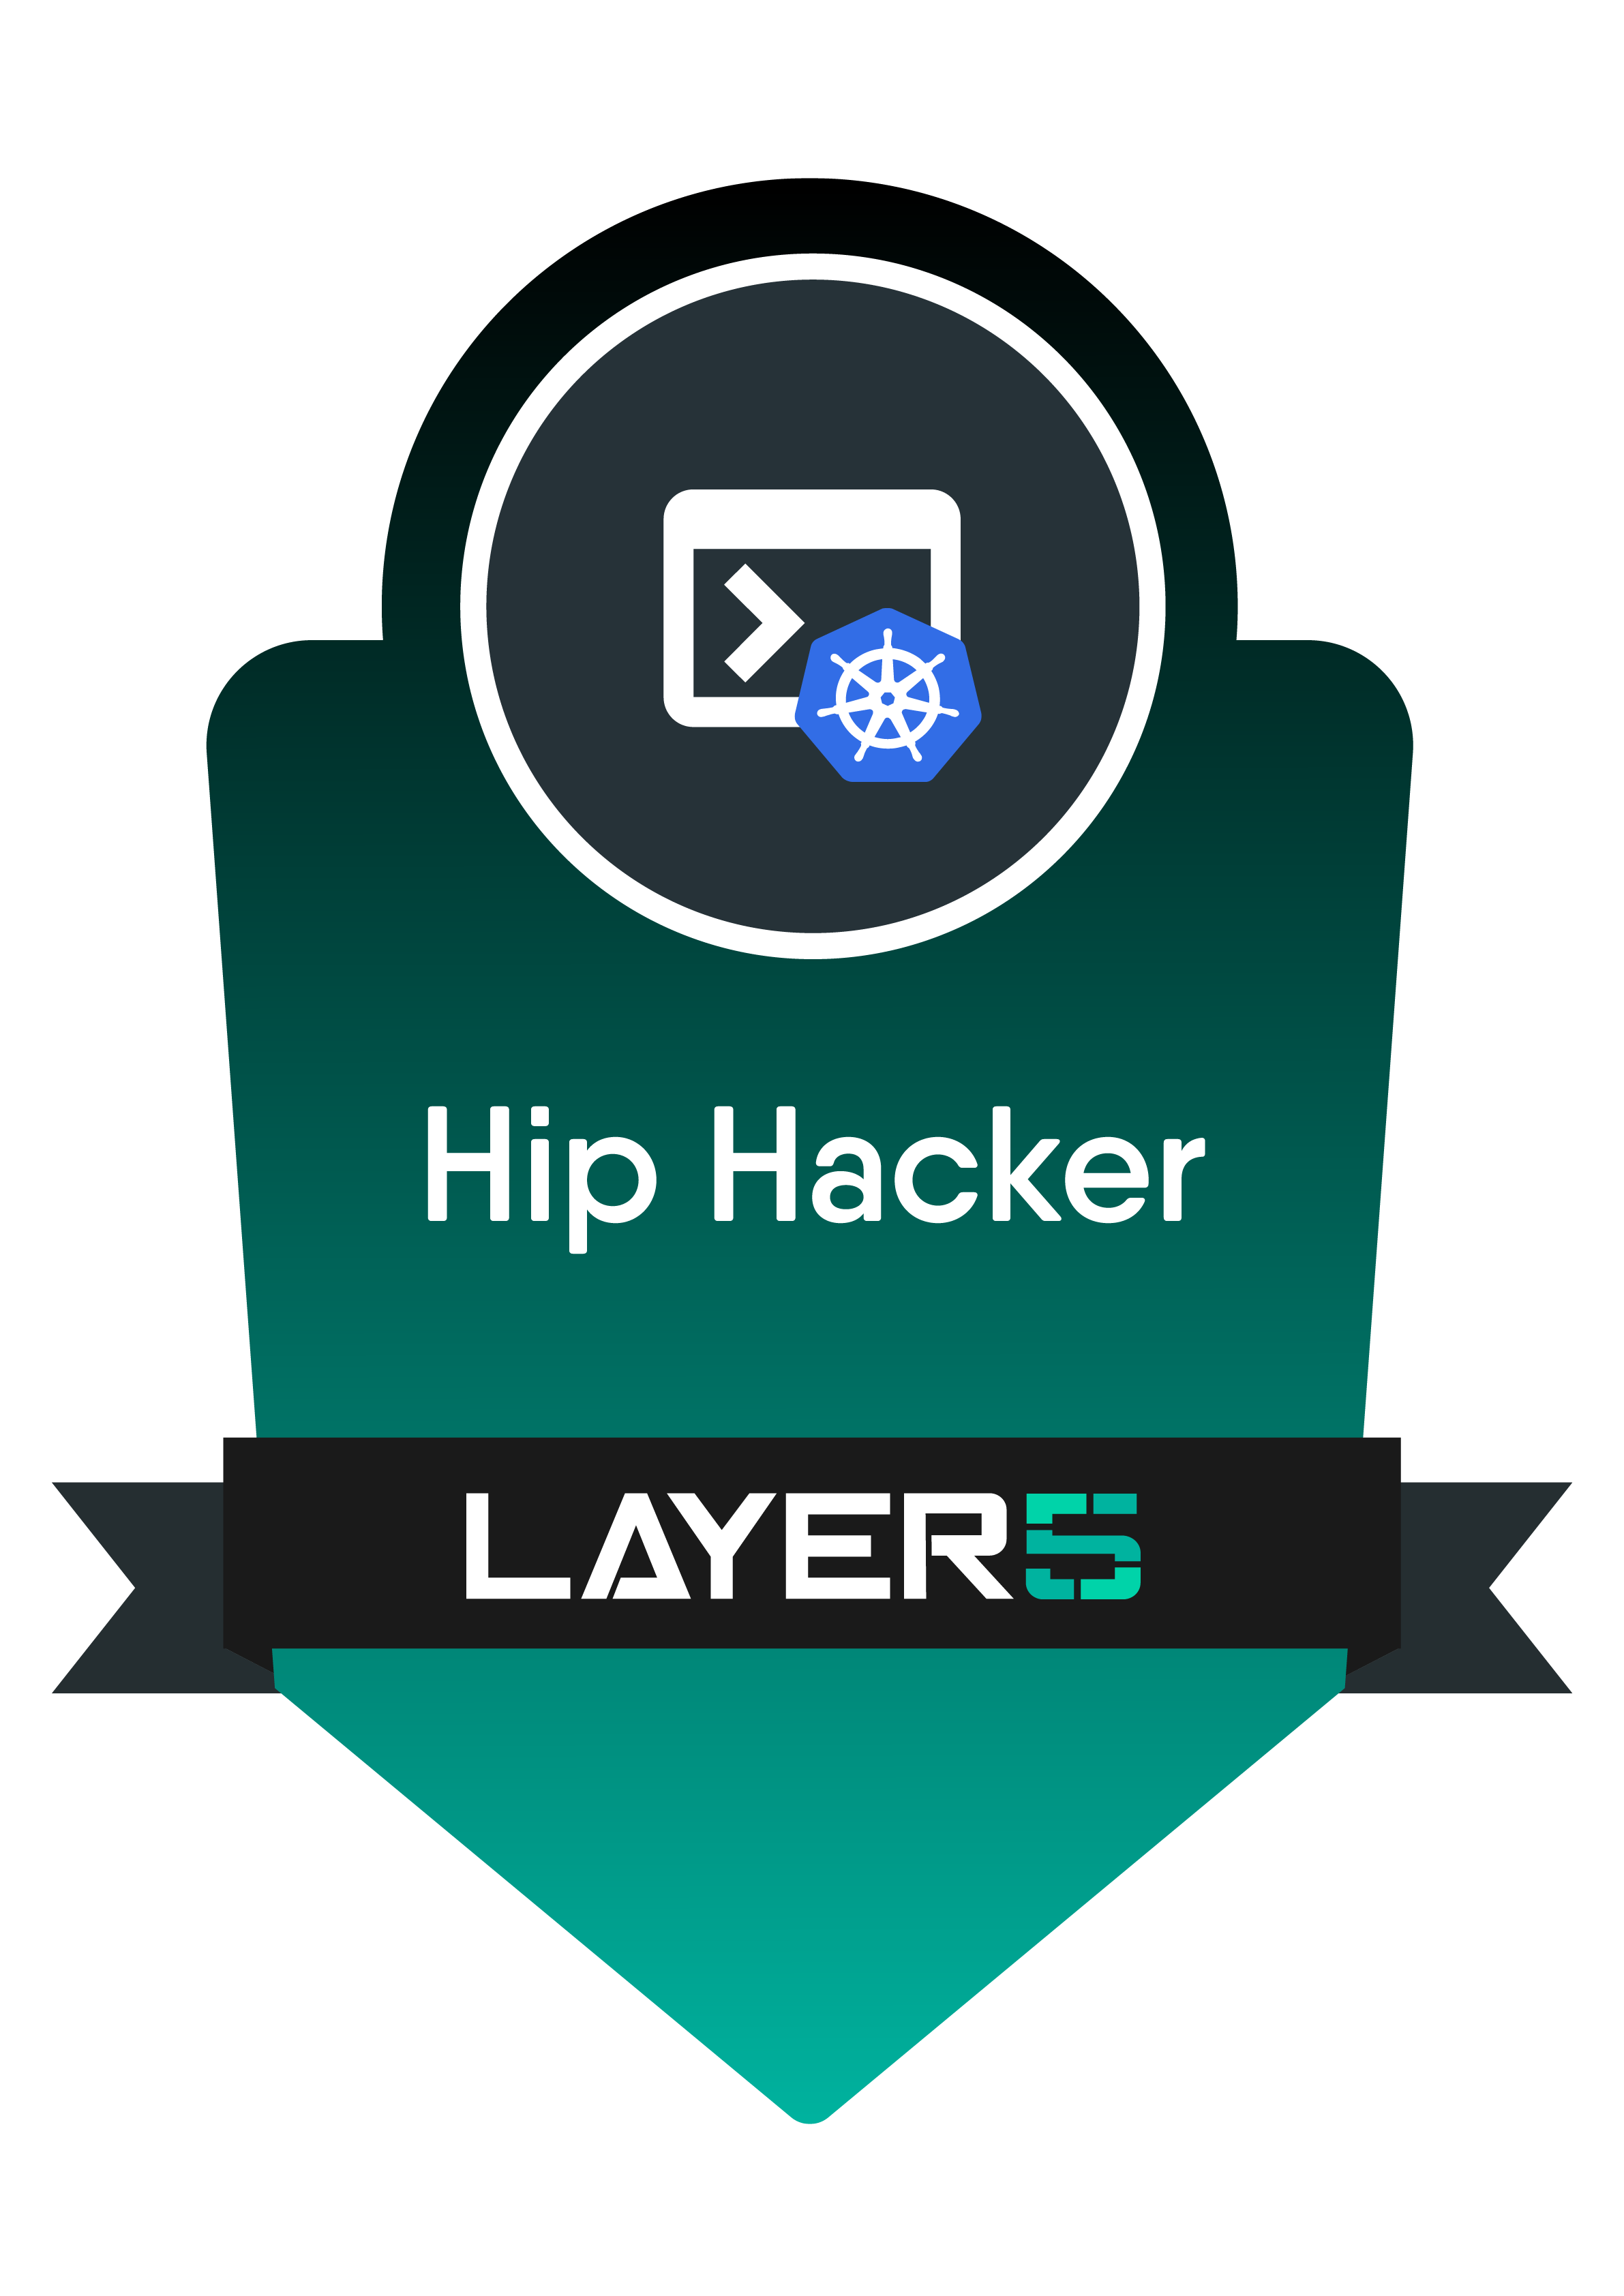 Layer5 badges